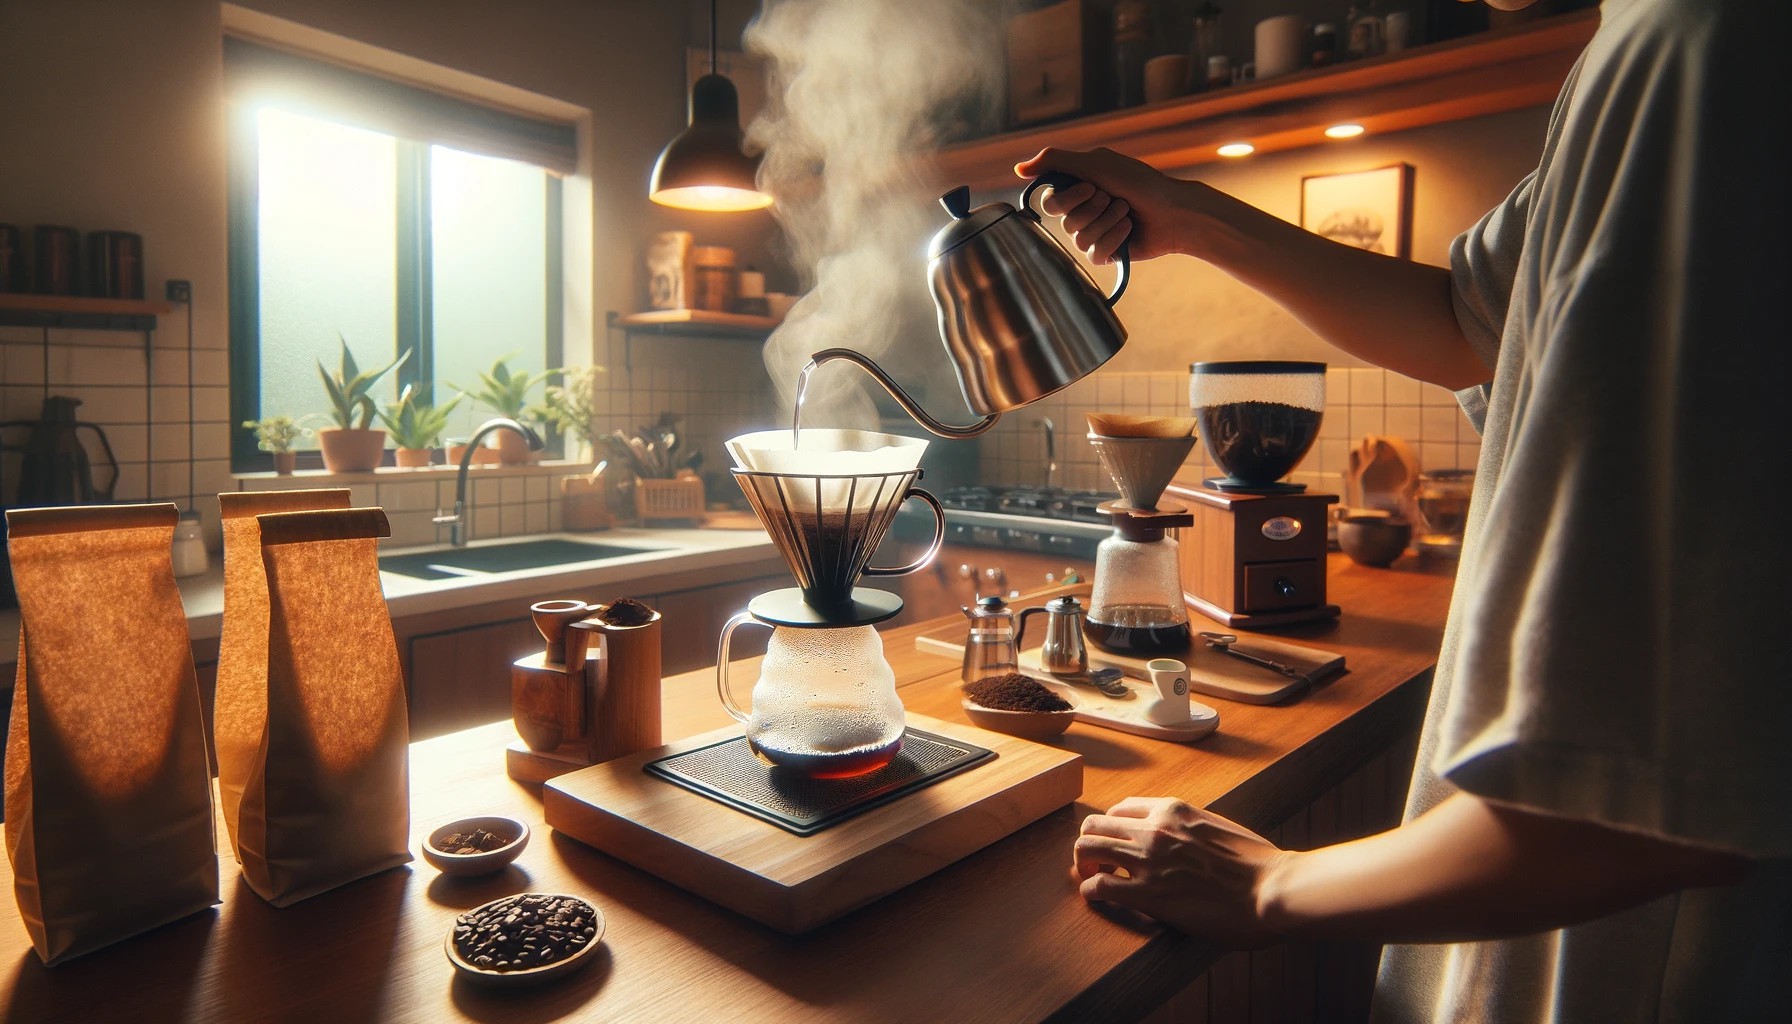 手沖咖啡 烘焙 研磨 濾網 注水 咖啡豆 Hand-brewed coffee roasting grinding filter water filling coffee beans